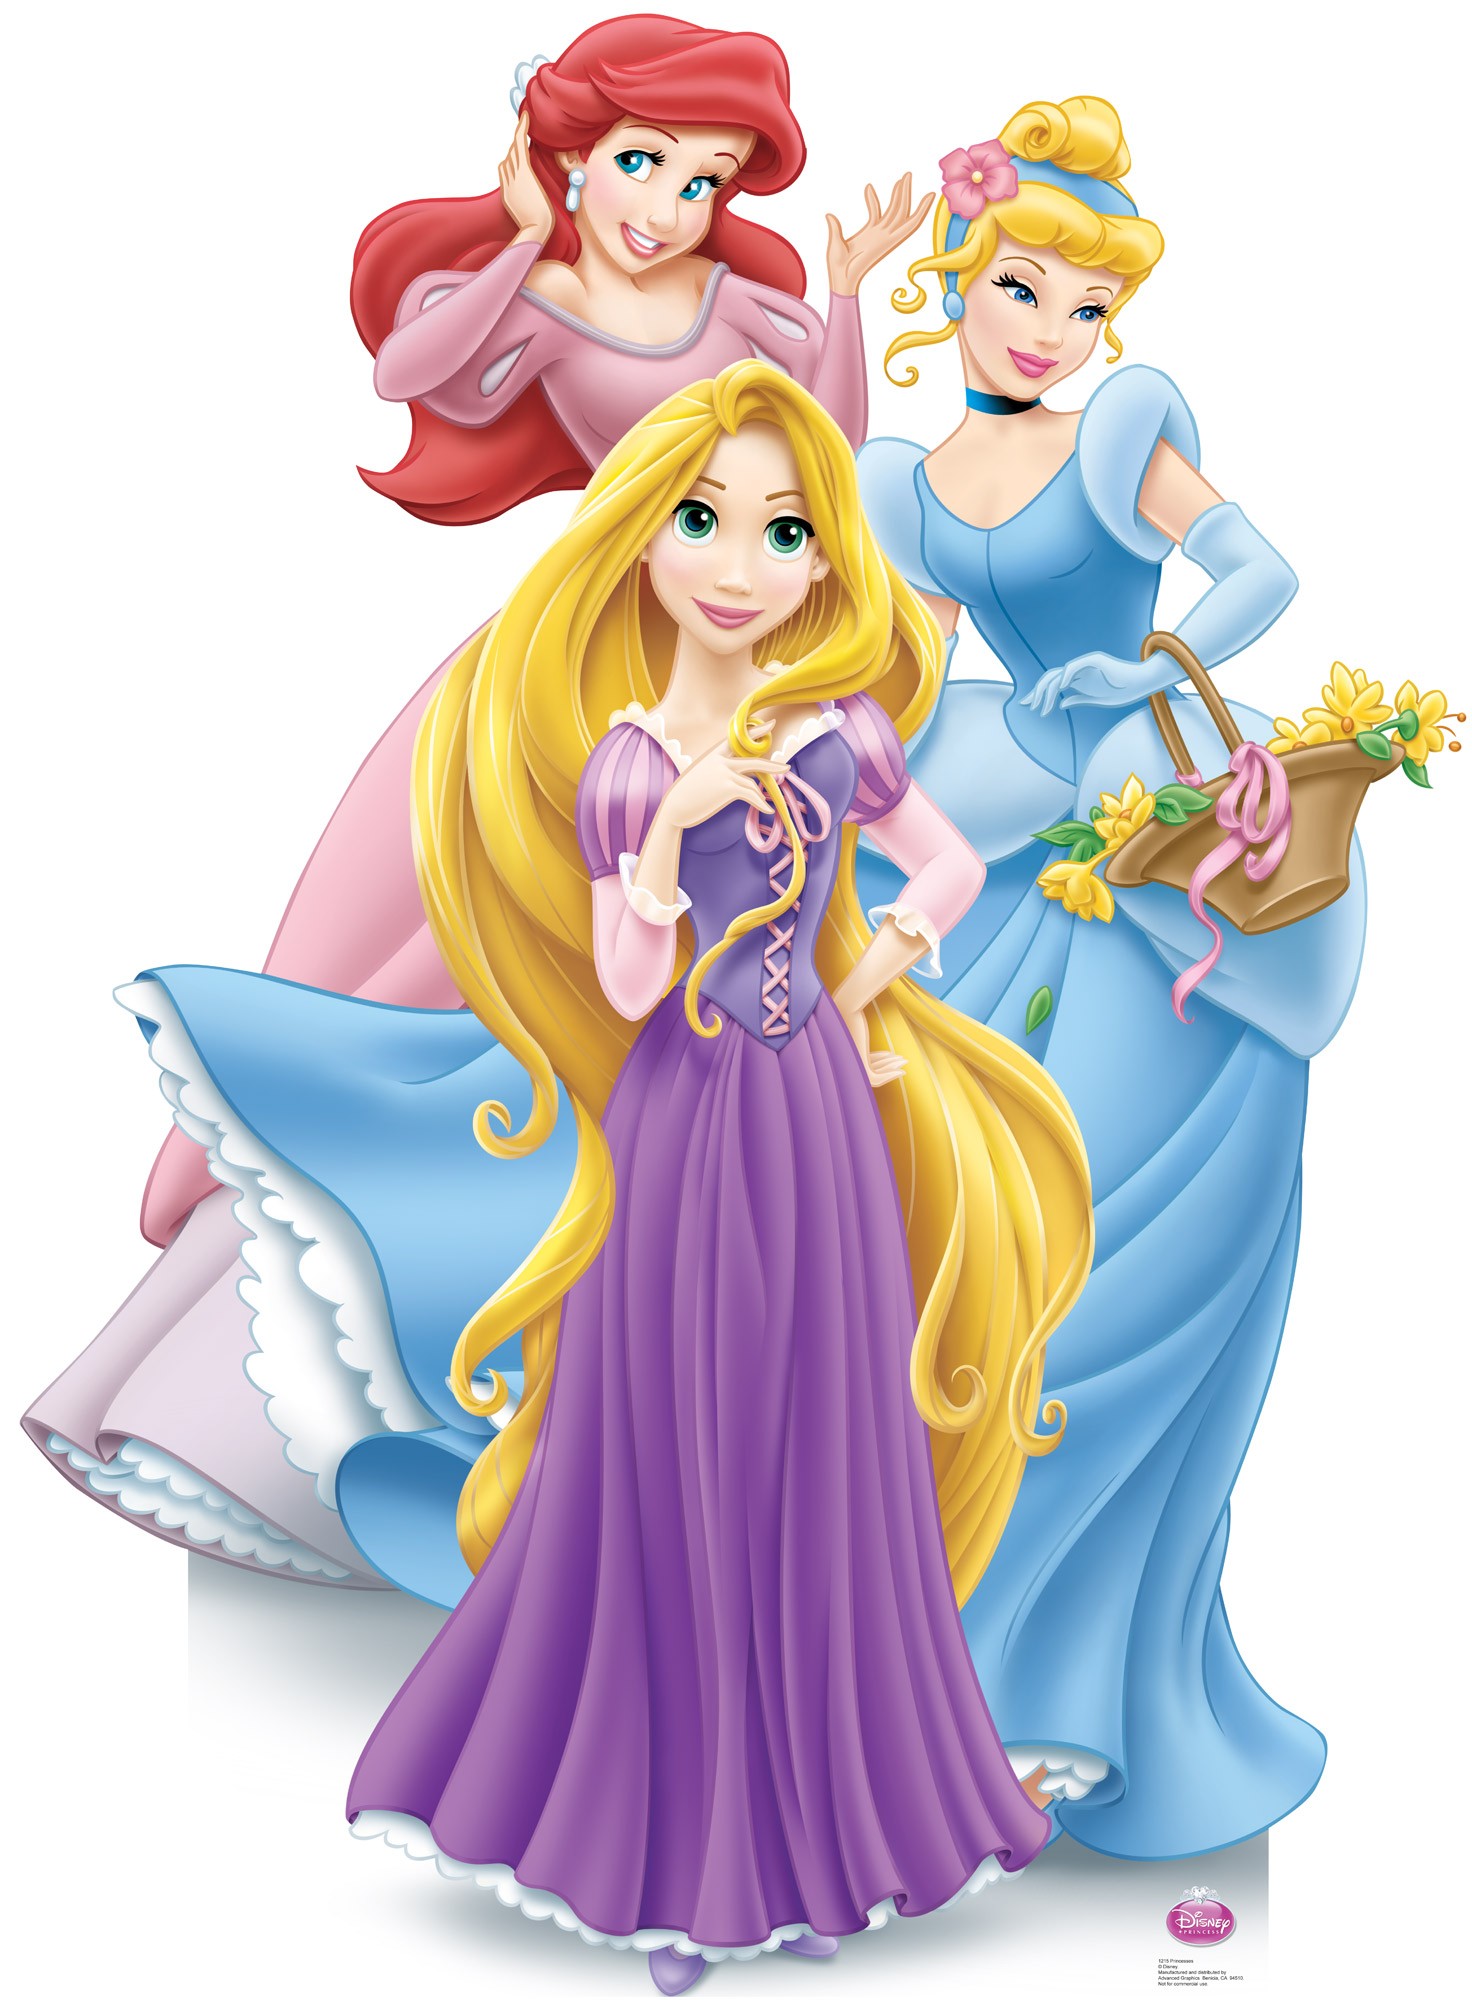 Disney Princess - Disney Princess Photo (33854134) - Fanpop